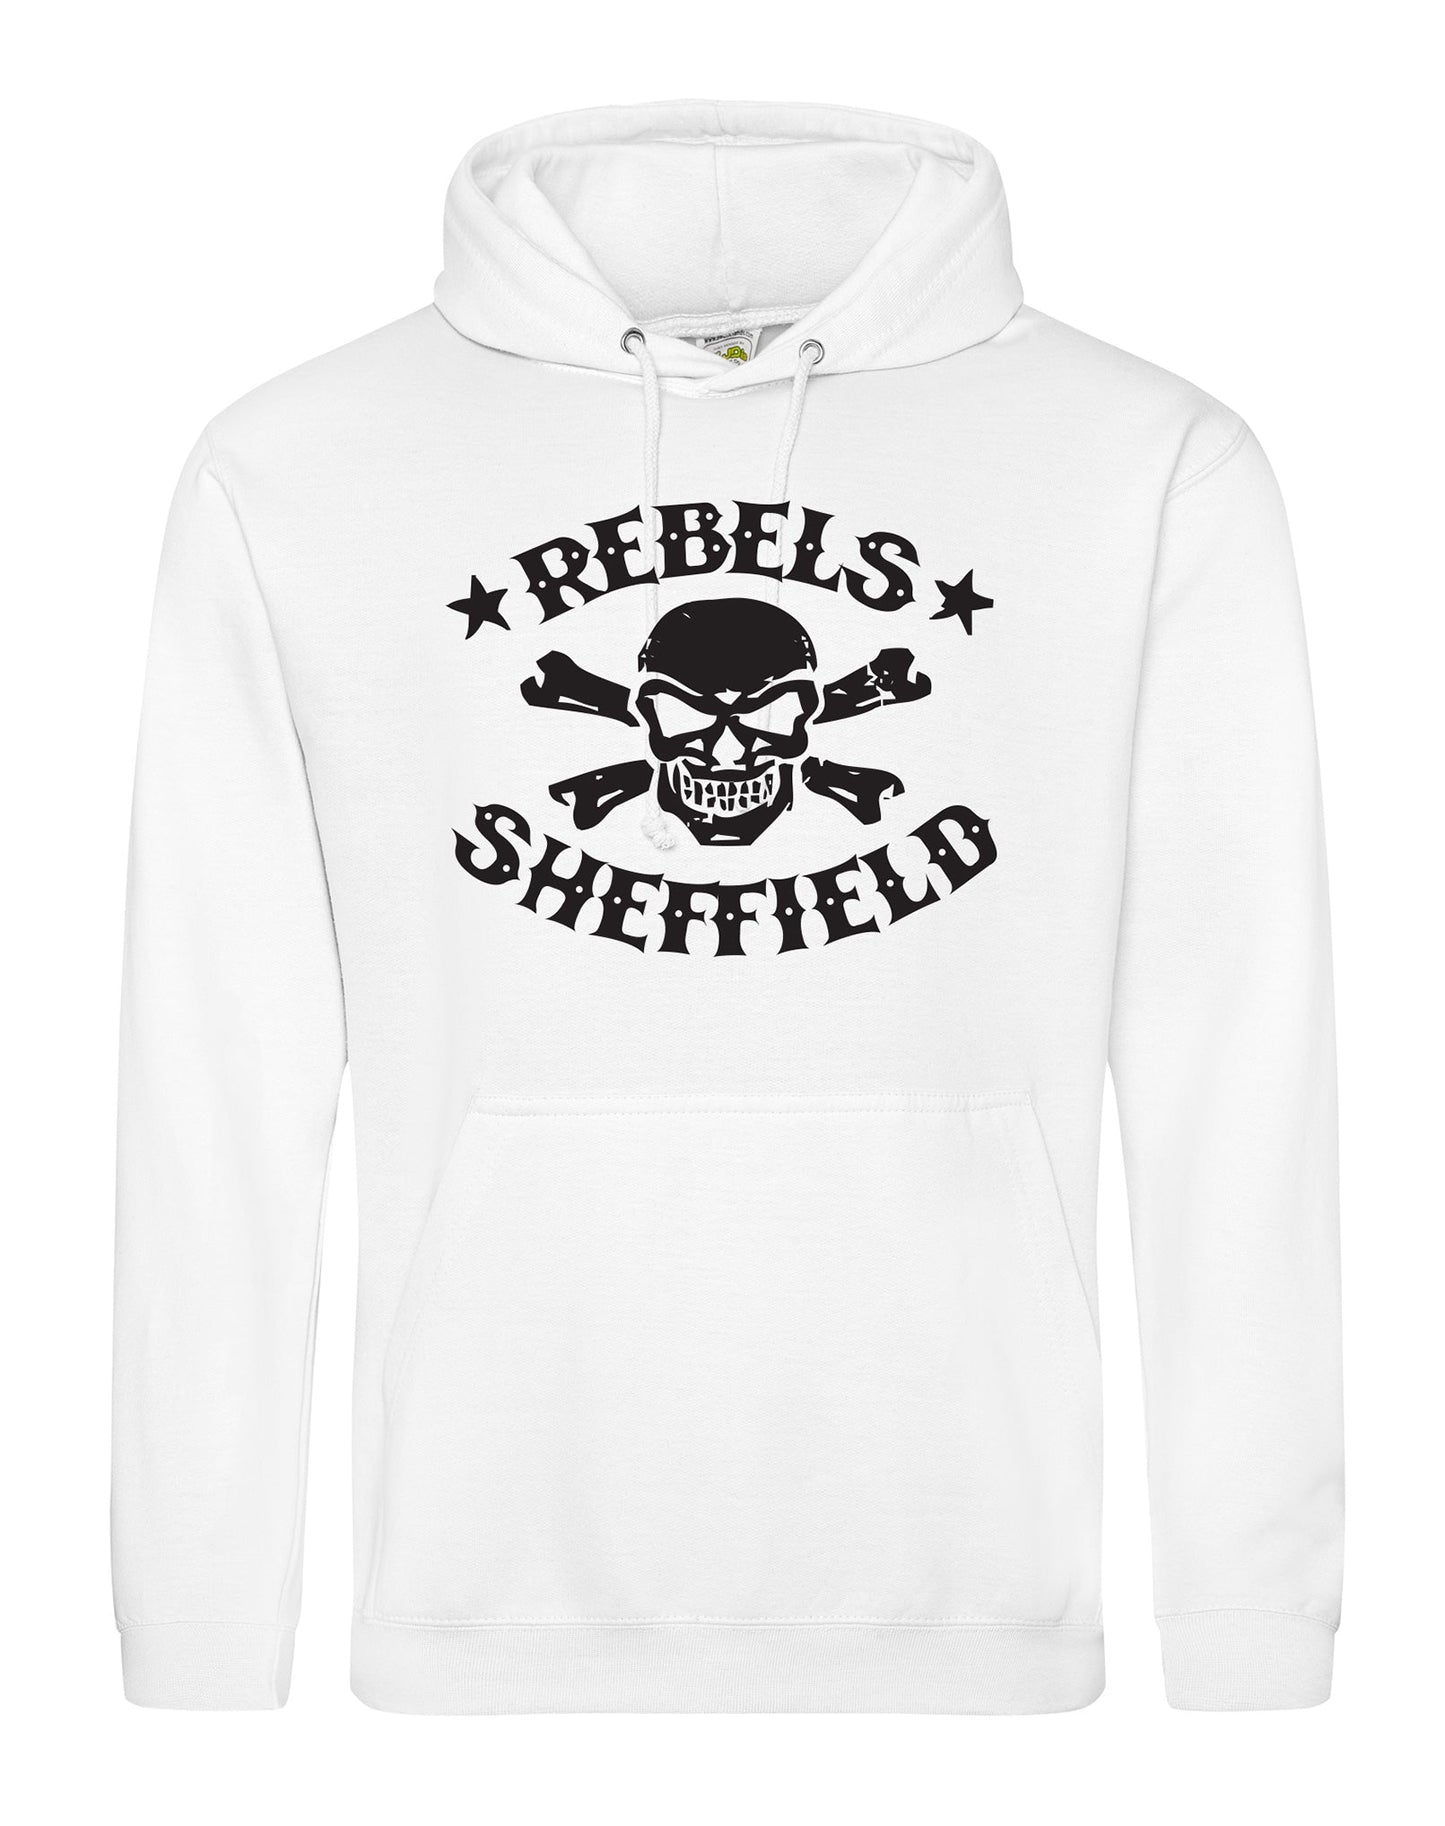 Rebels skull crossbones unisex fit hoodie - various colours - Dirty Stop Outs